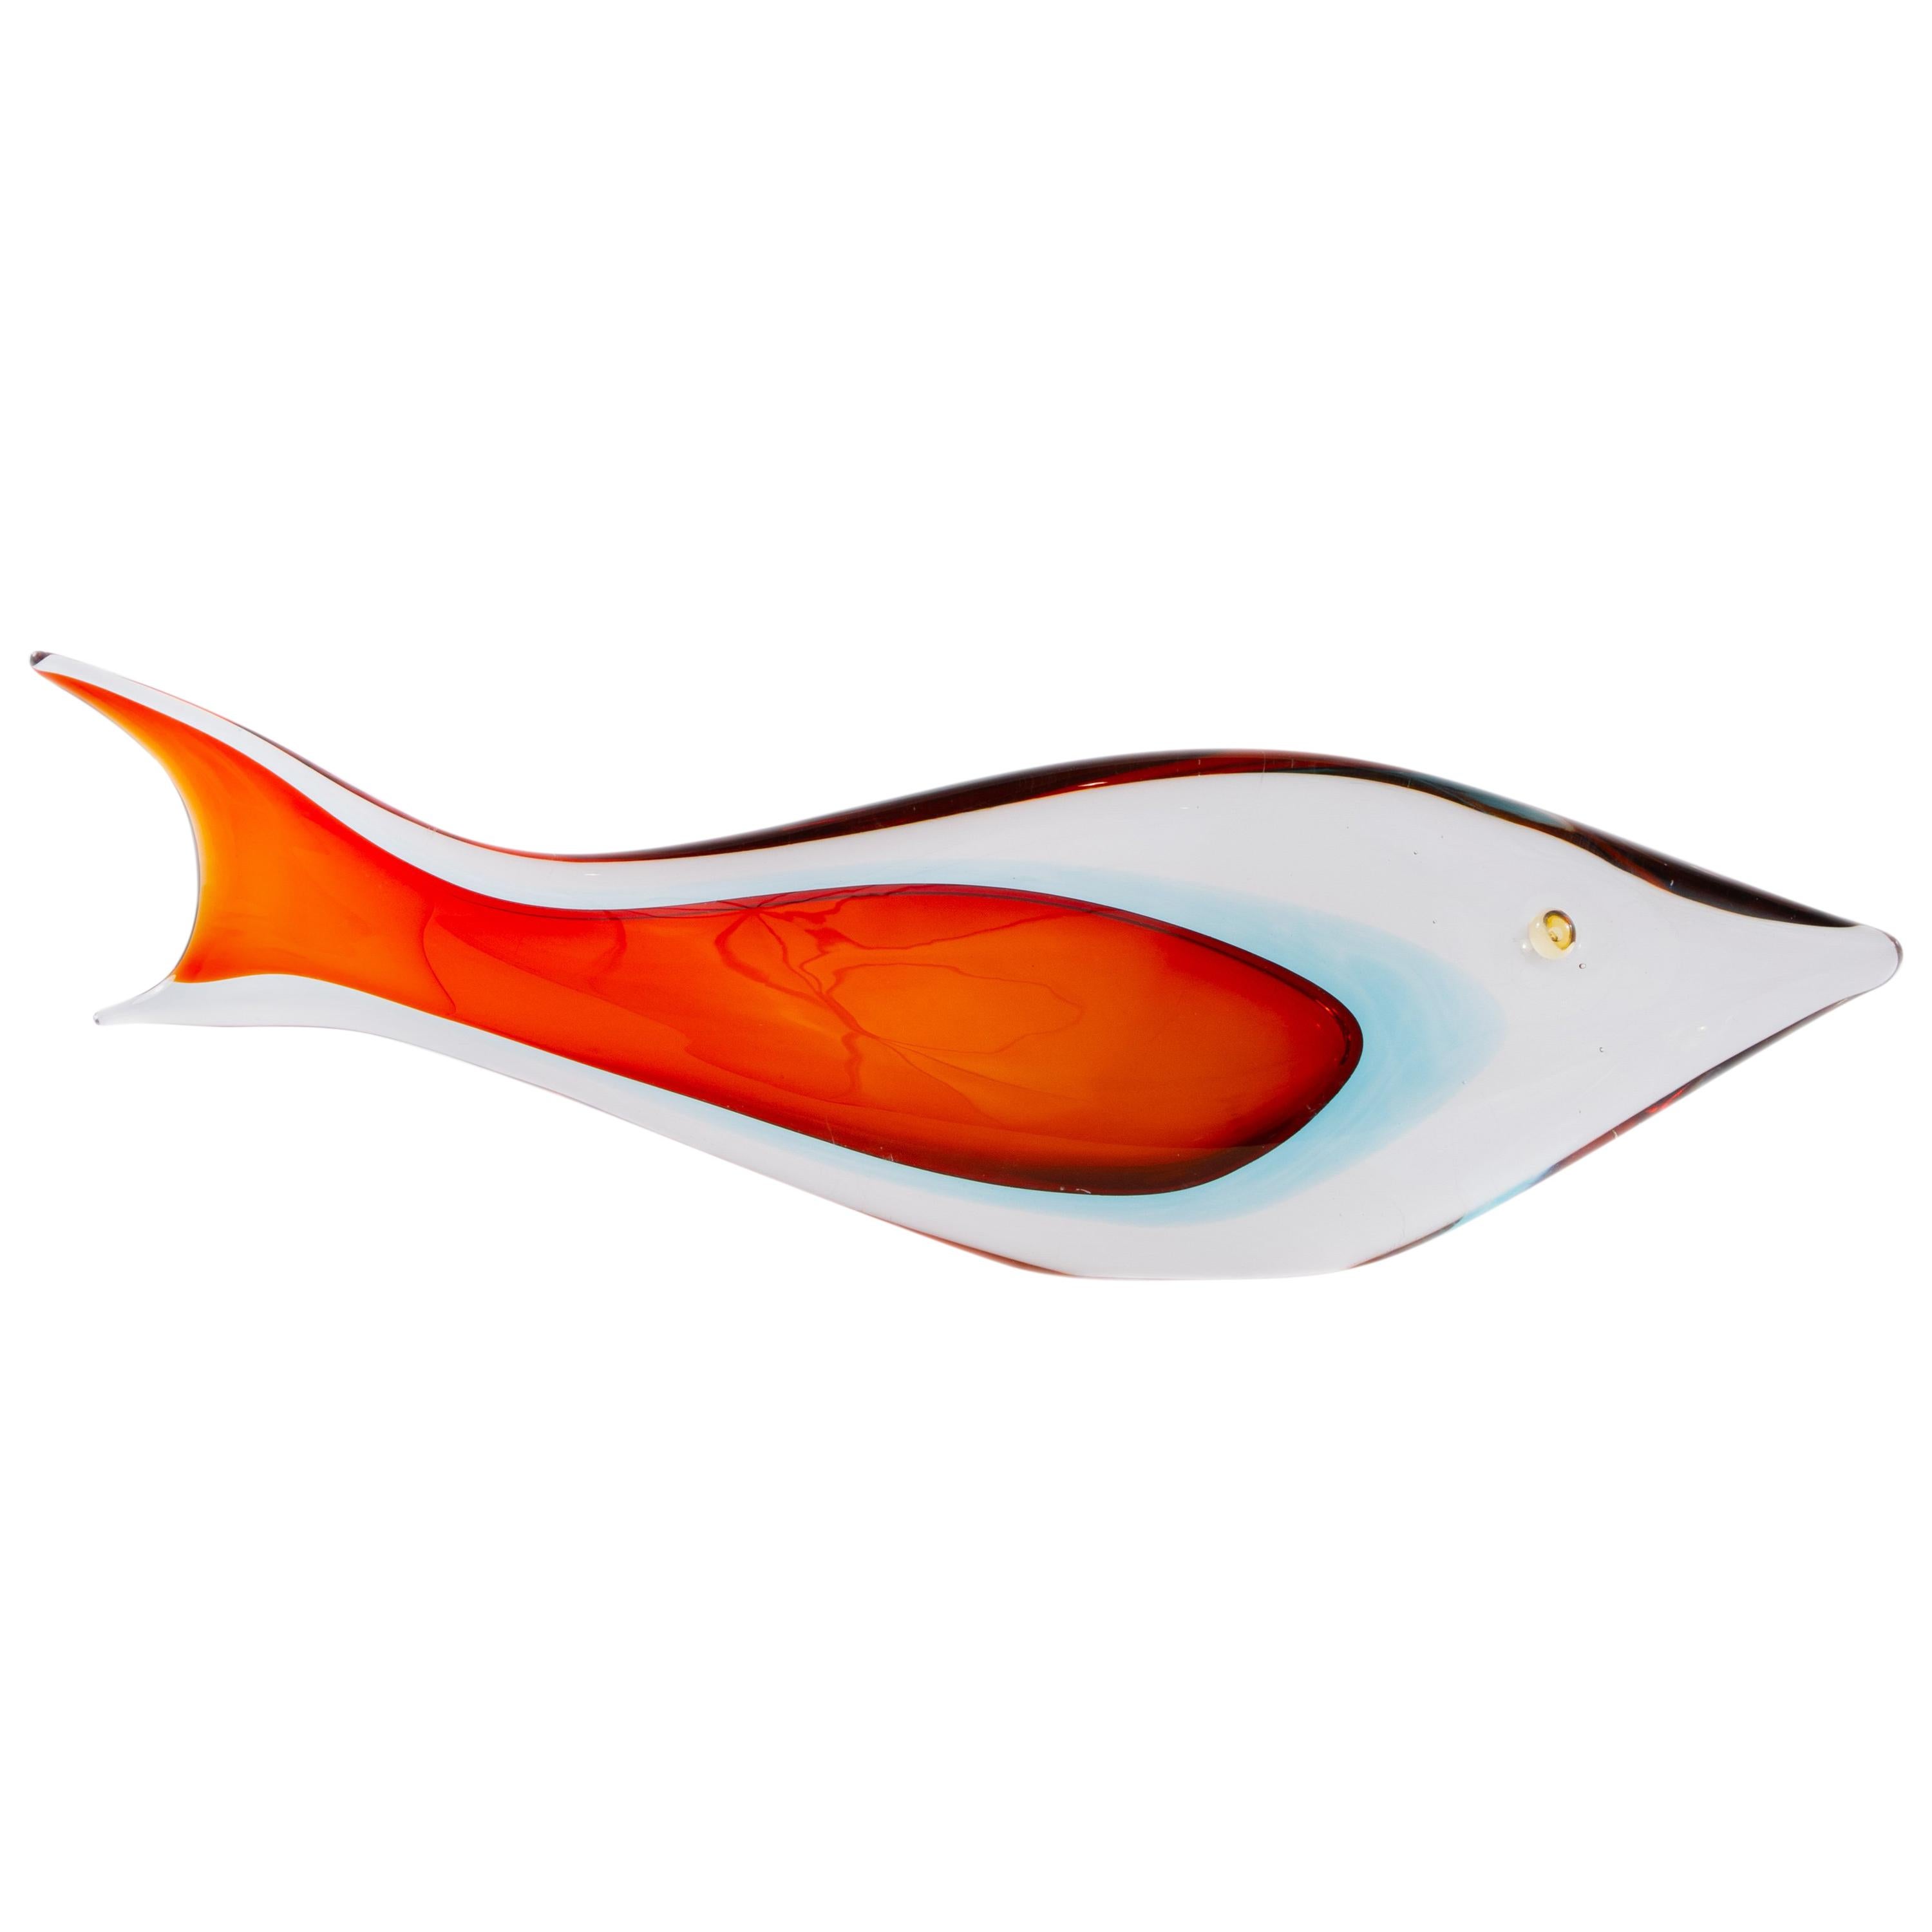 Mid-Century Modern Italian Glass "Pesce" Fish Sculpture by, Antonio da Ros